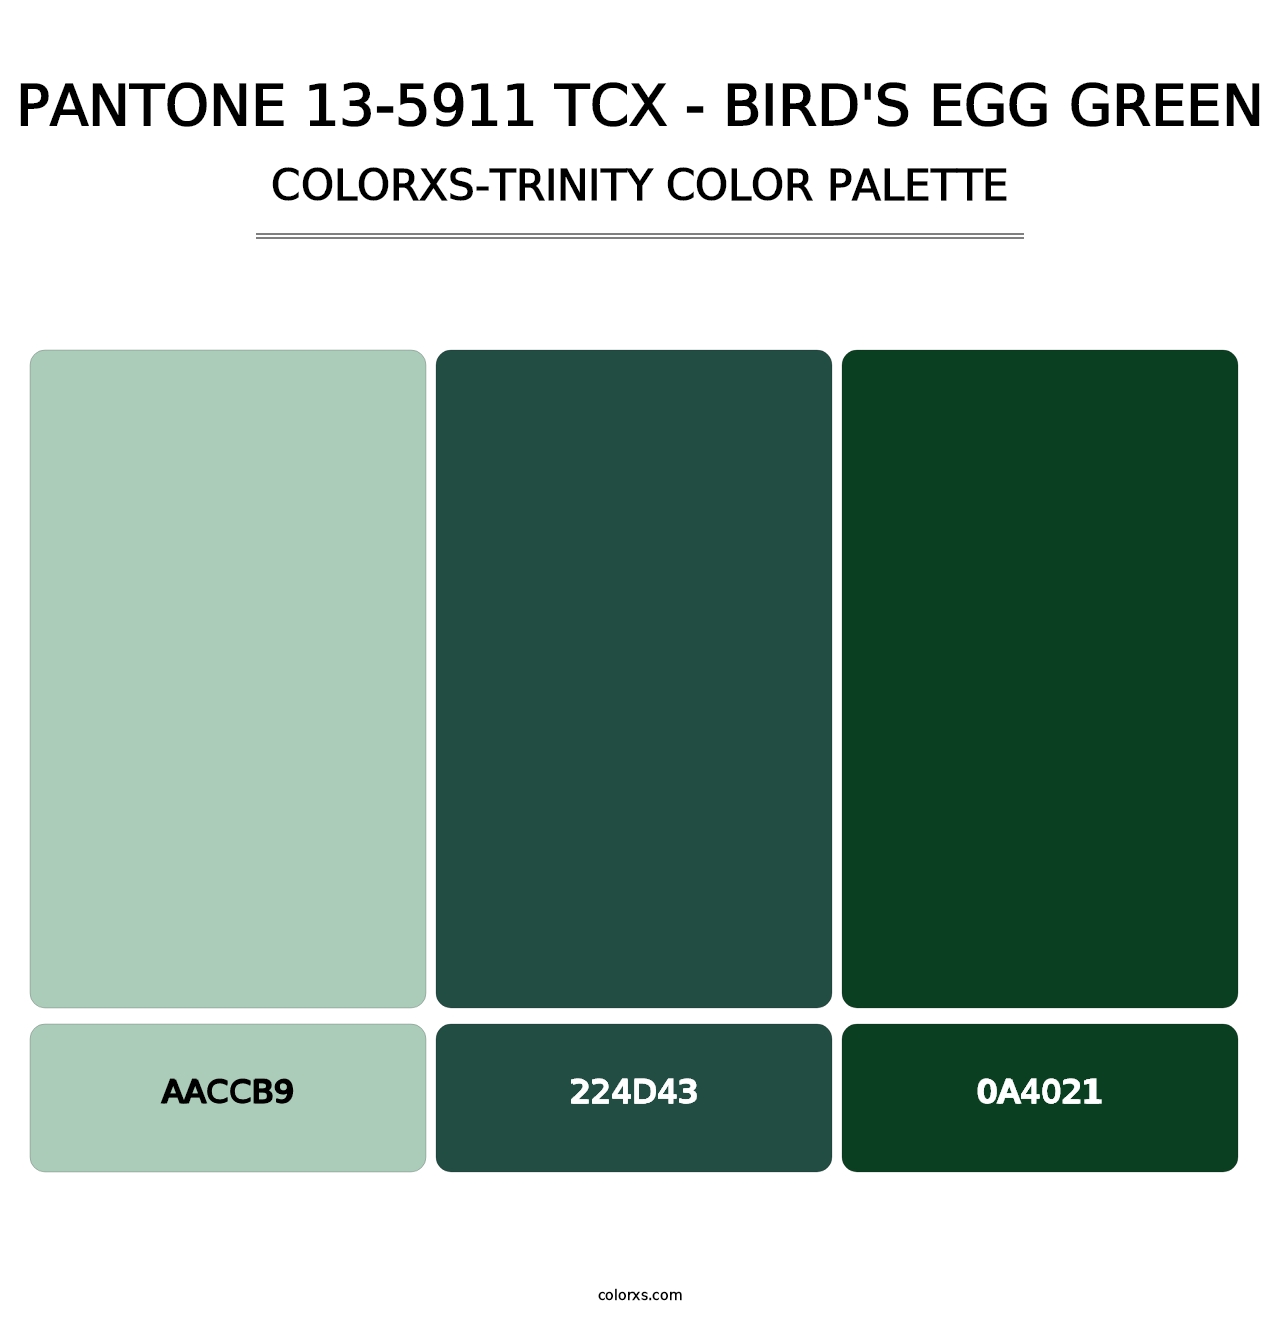 PANTONE 13-5911 TCX - Bird's Egg Green - Colorxs Trinity Palette